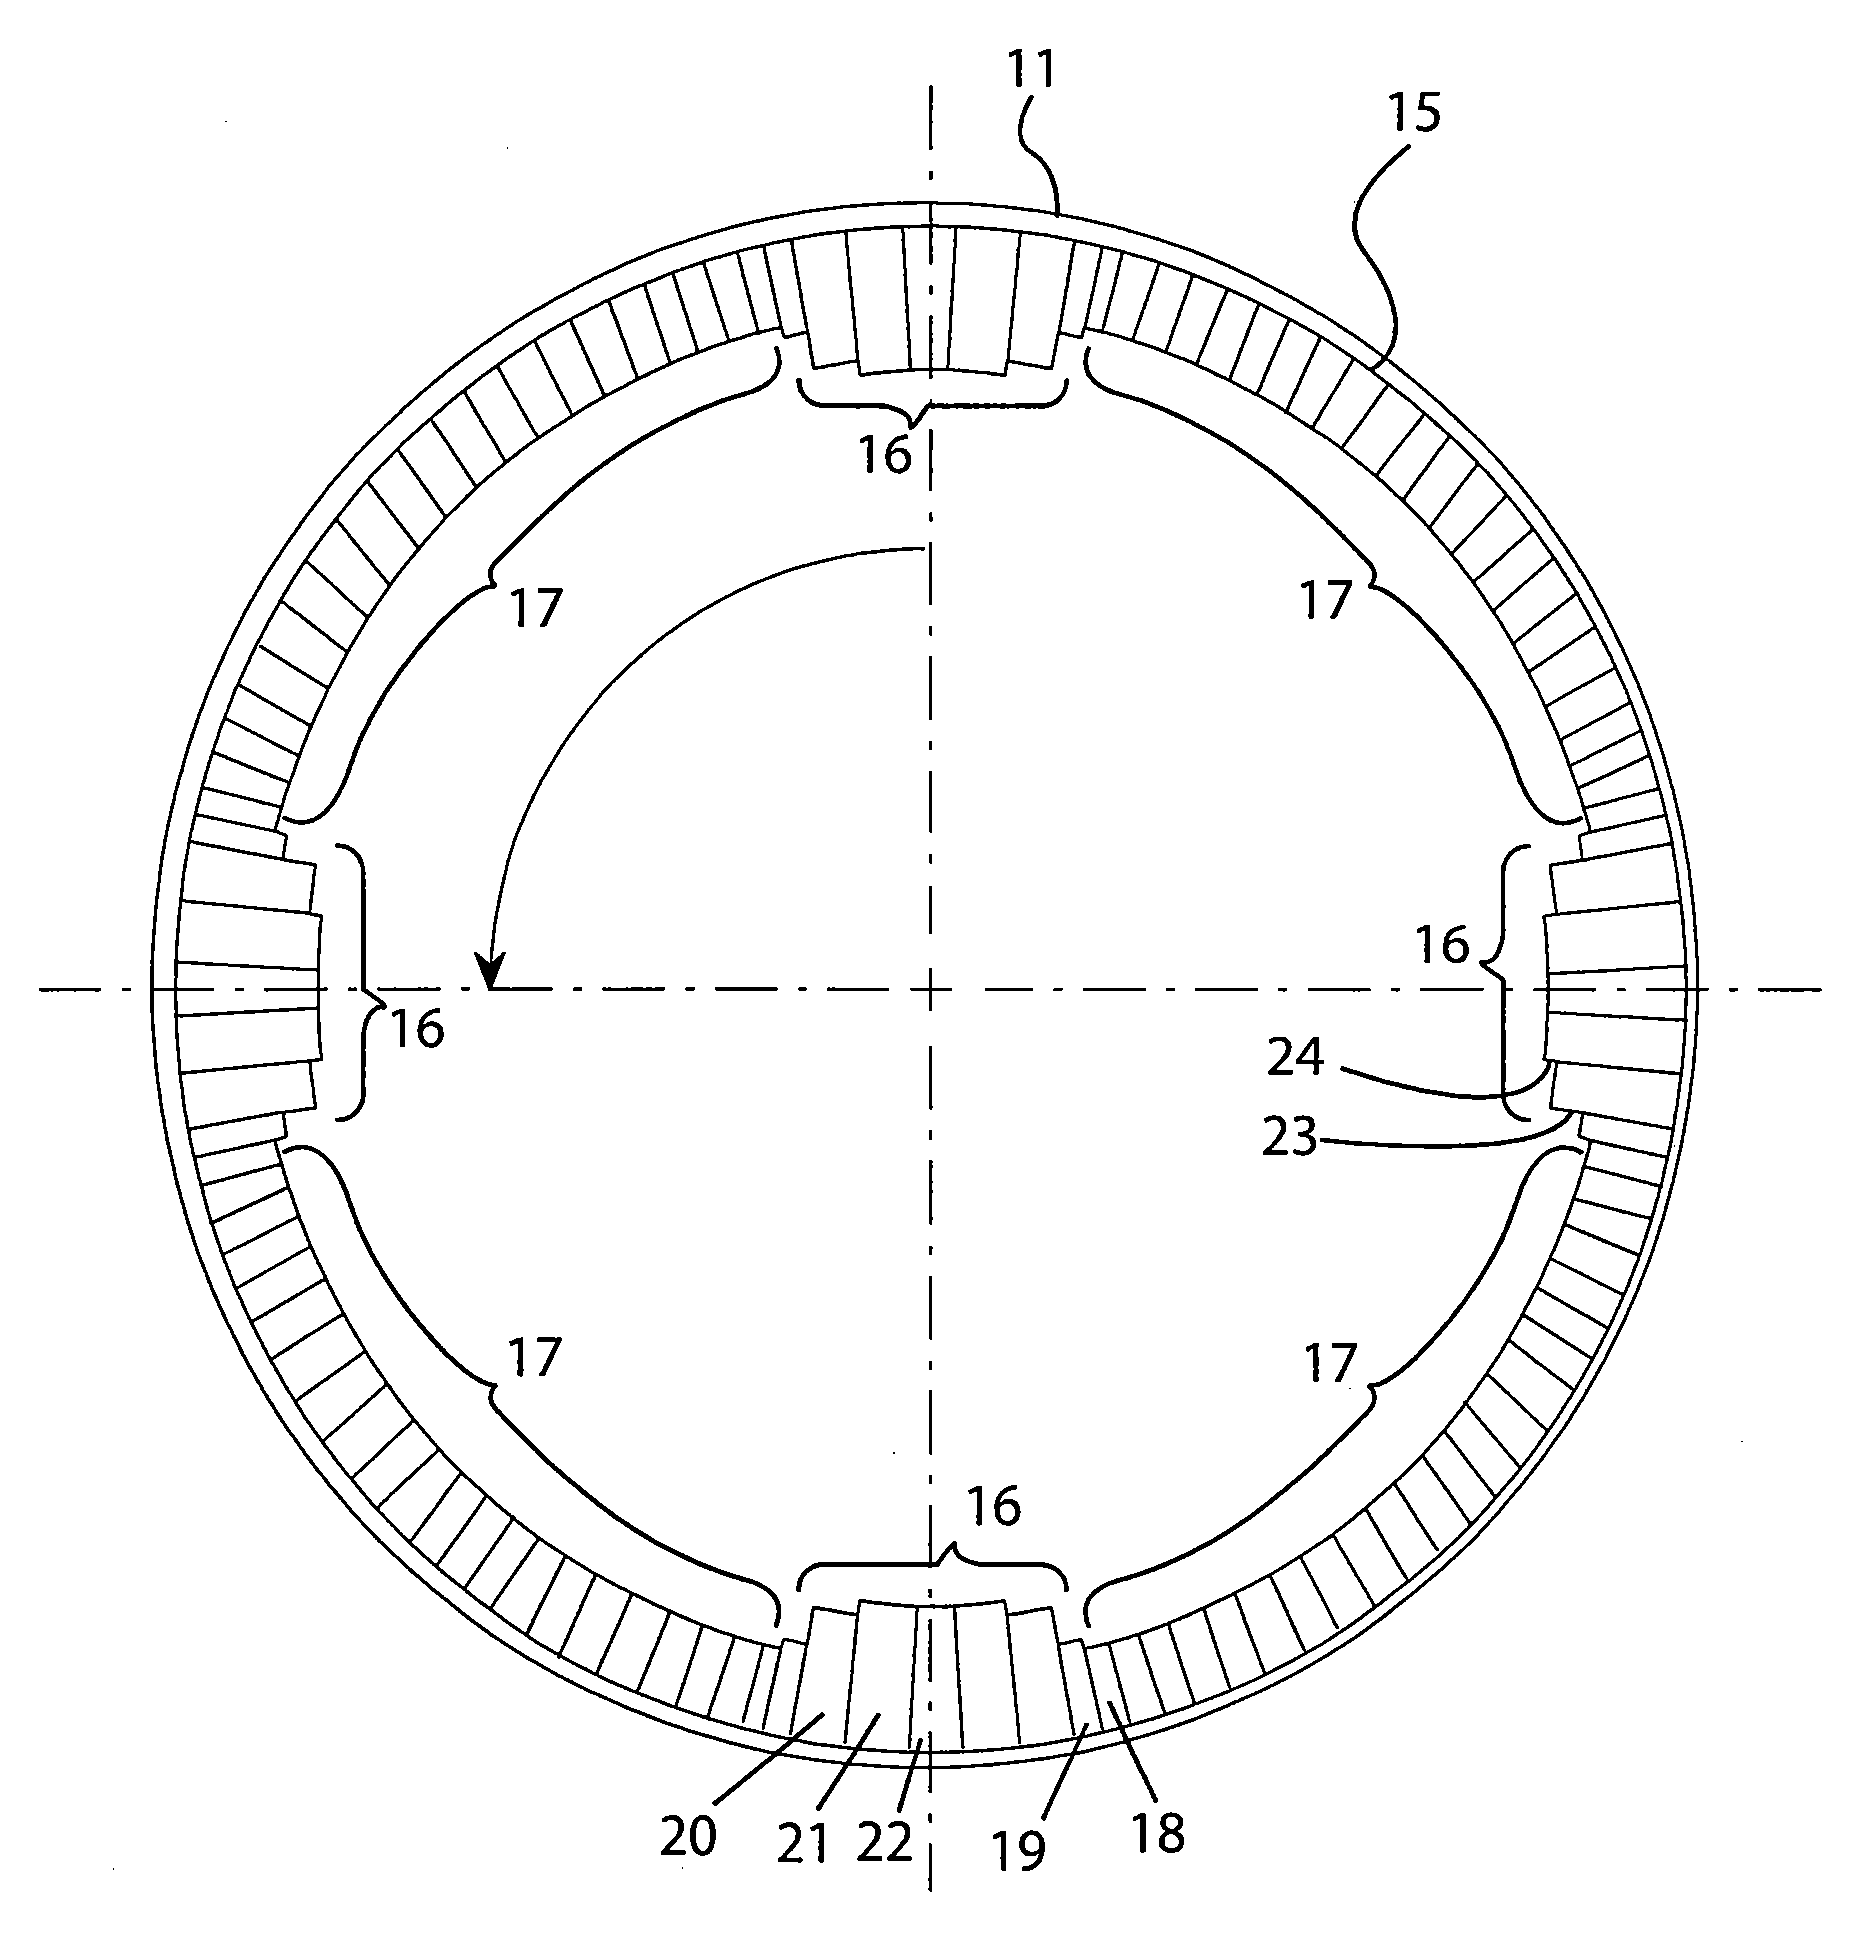 Rotary kiln lining and method